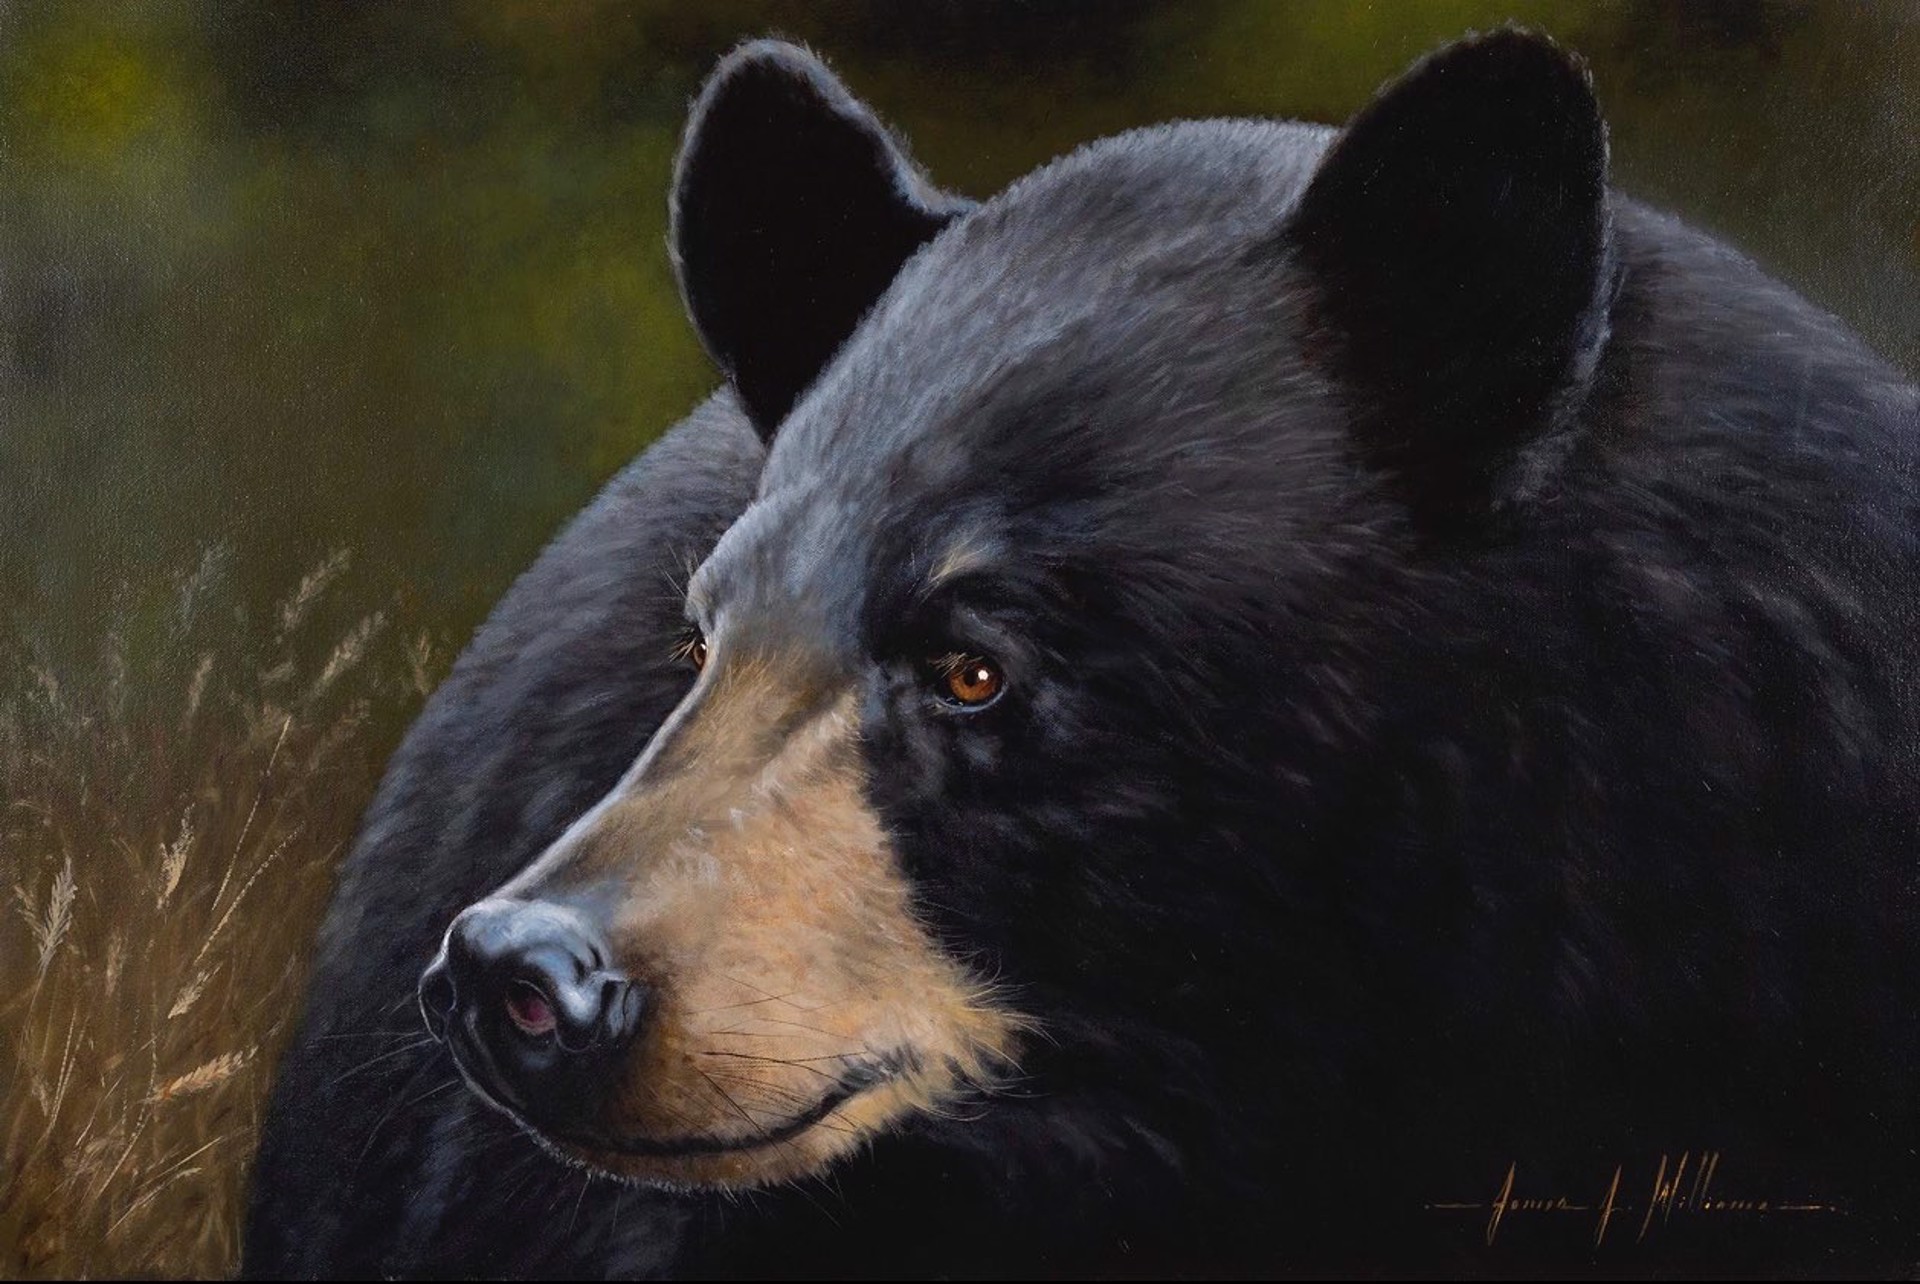 Harmony Bear by James J. Williams